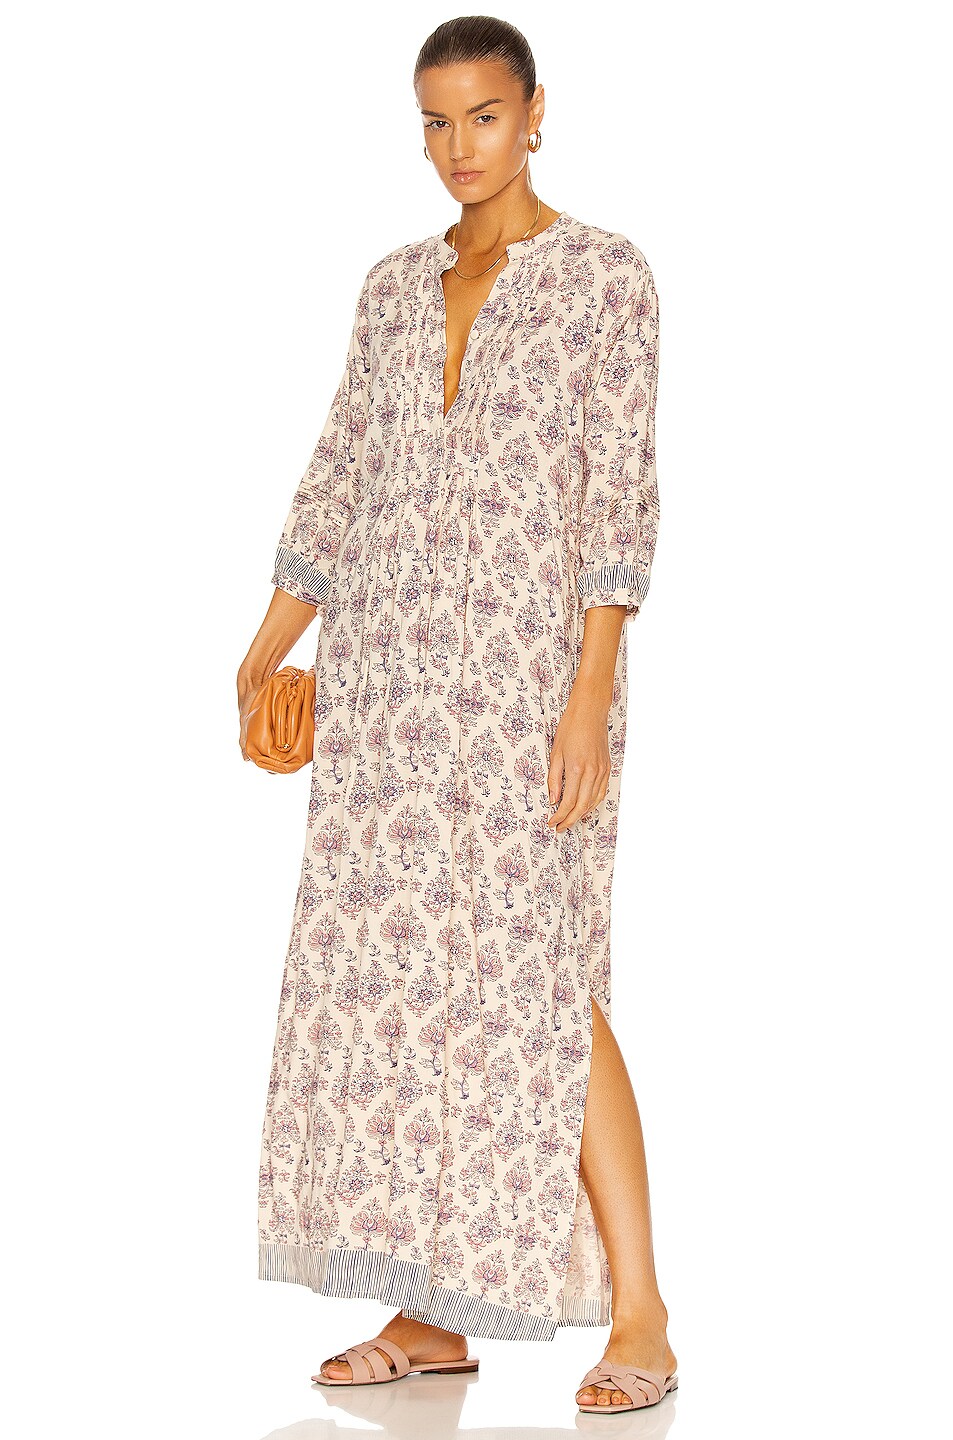 Natalie Martin Sammie Maxi Dress in Cyprus Print Lilac | FWRD